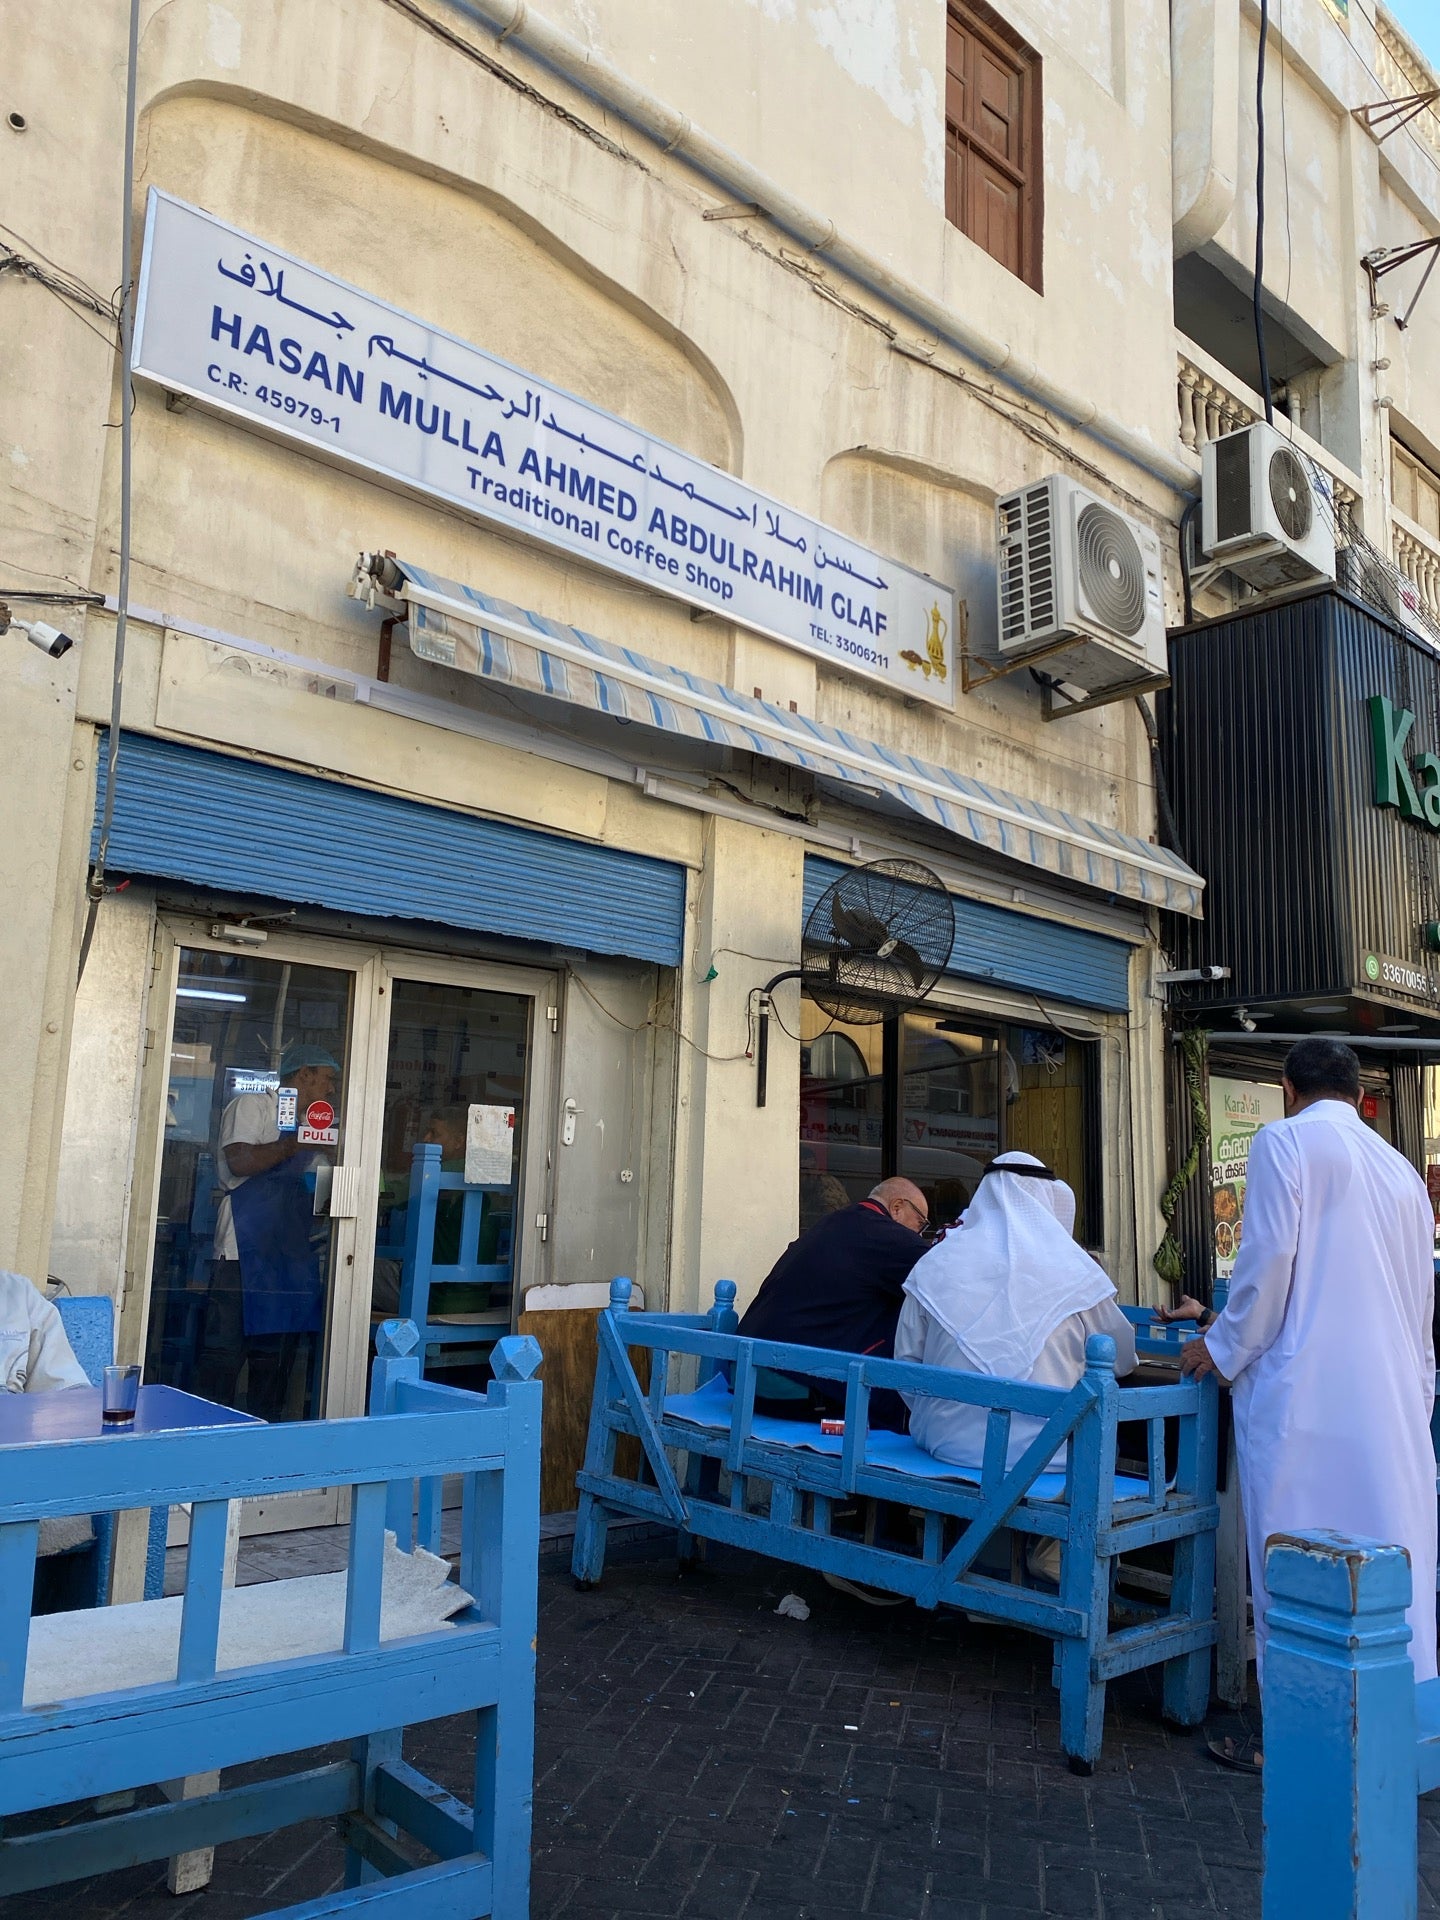 Ahmed Abdul Rahim Traditional Caffee Shop